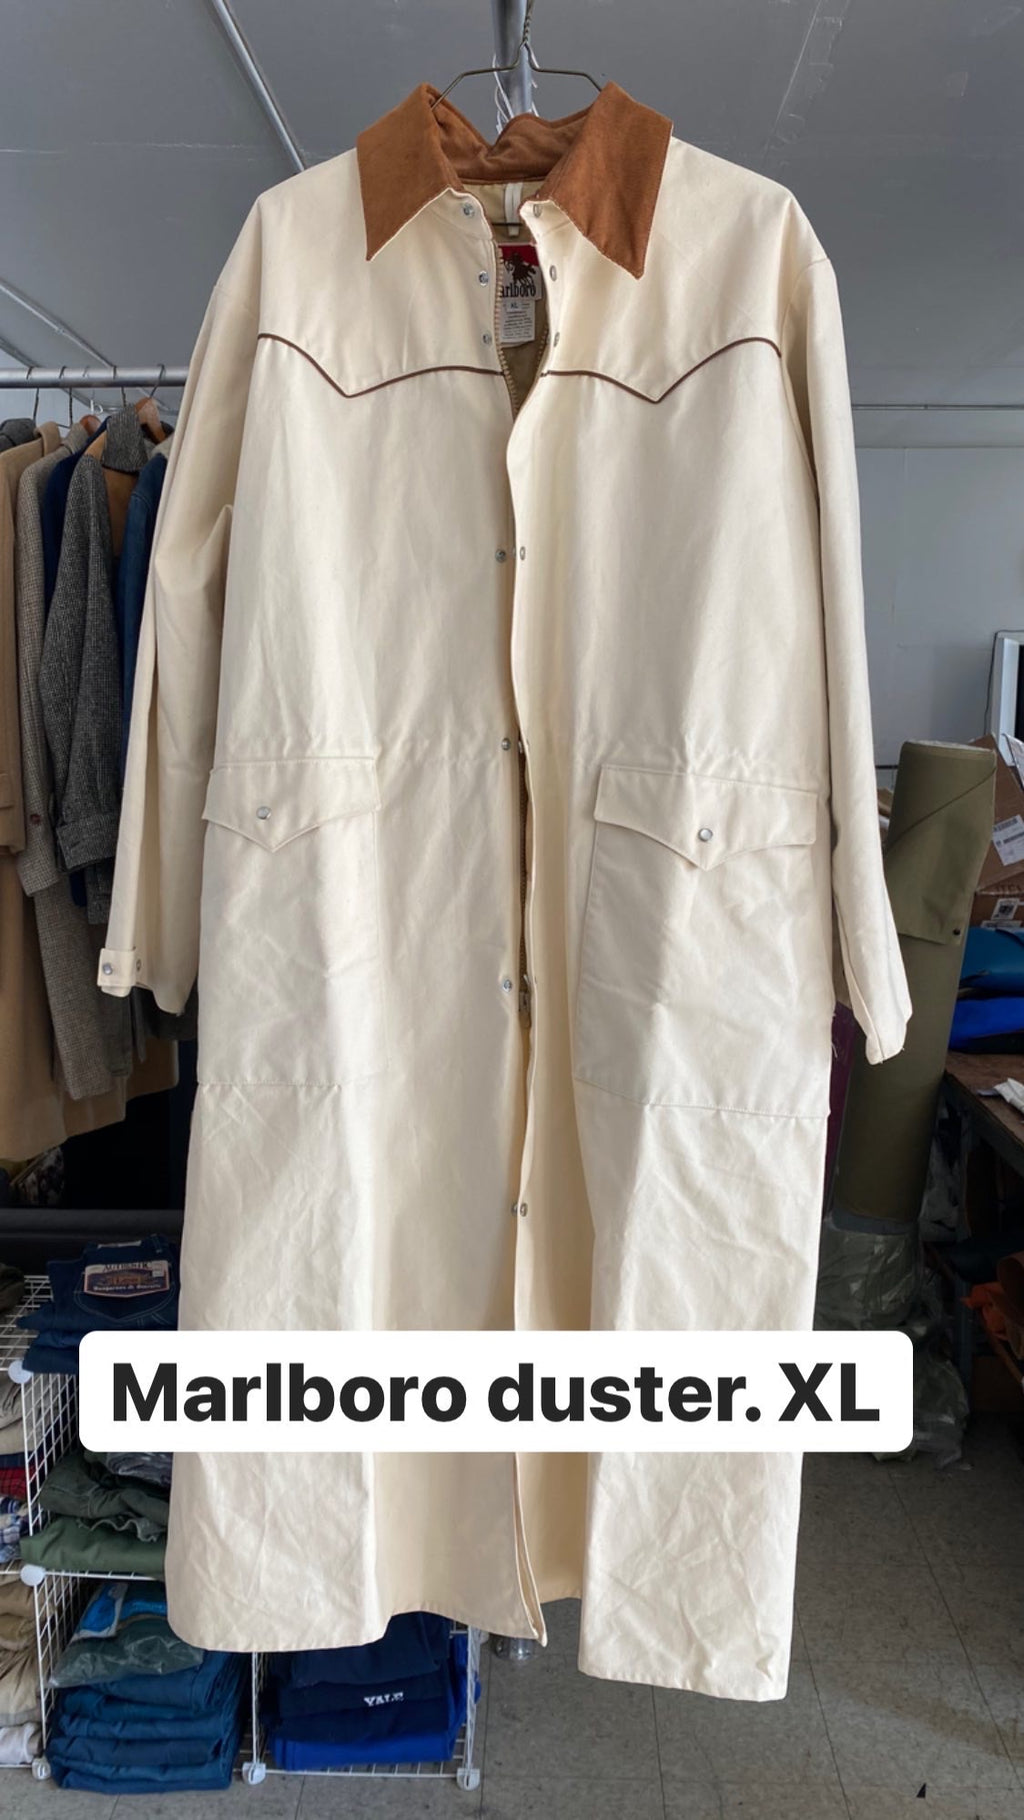 Marlboro duster XL